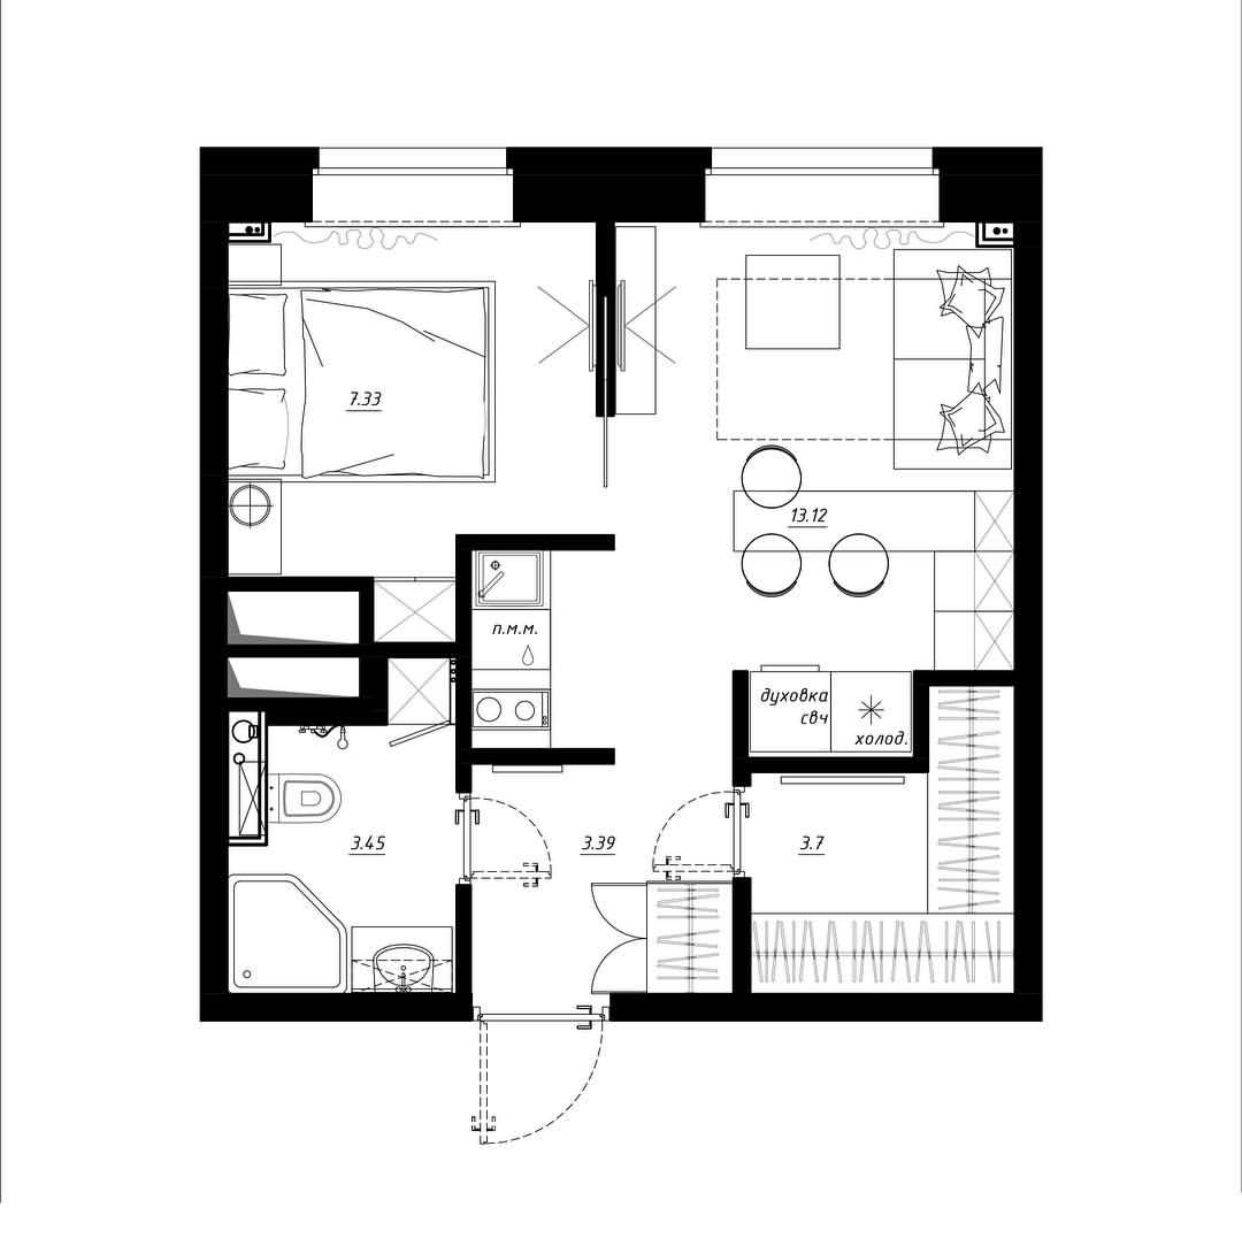 Дизайн однокомнатной квартиры 33 кв.м: фото | home-ideas.ru